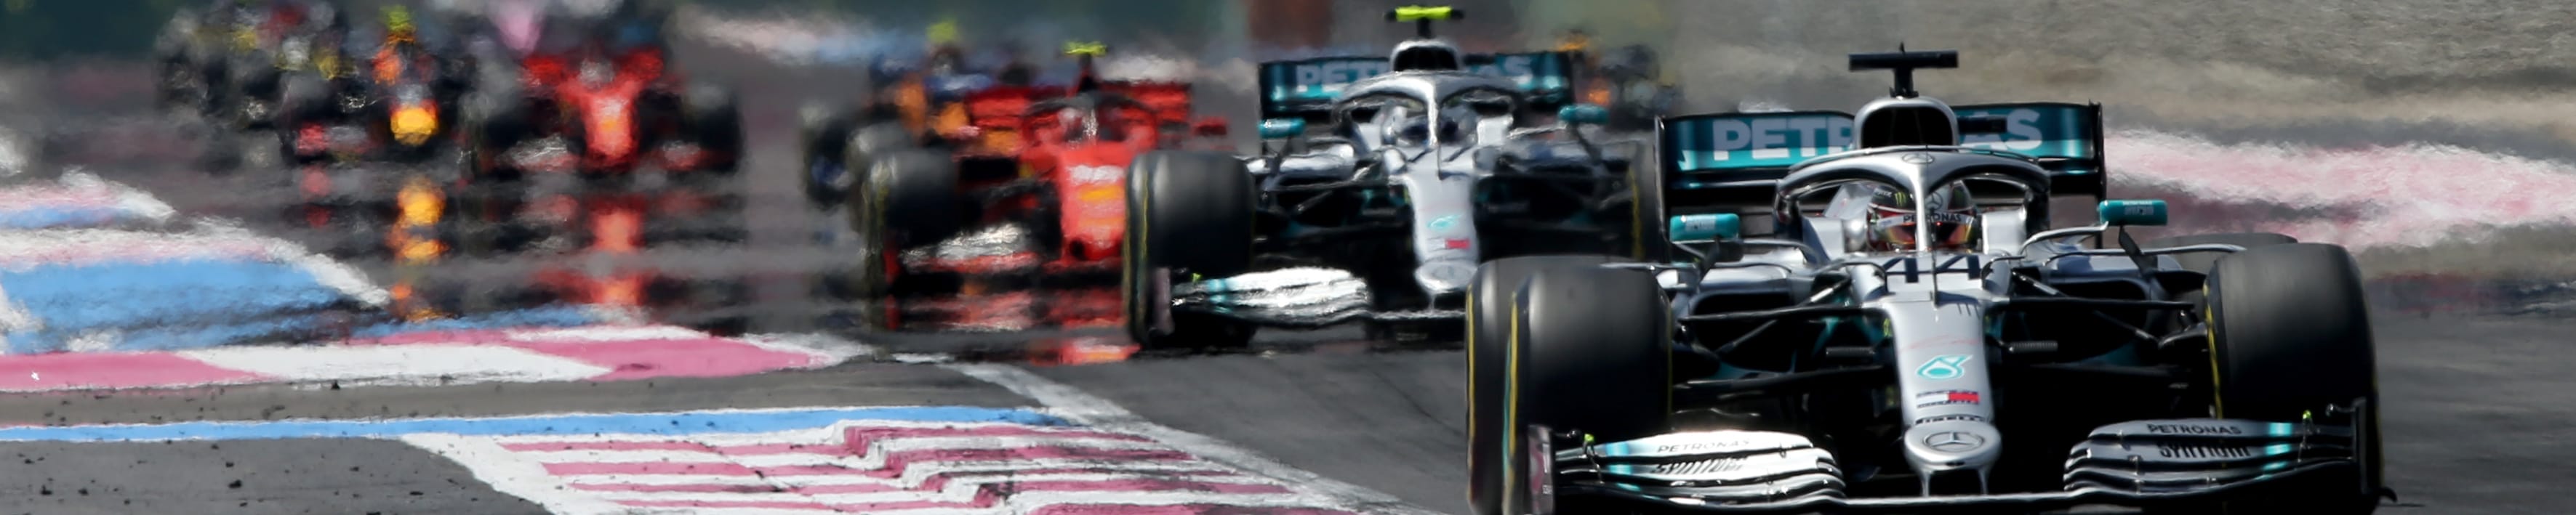 F1 Austrian Grand Prix: Αλλαγή εικόνας στην Αυστρία;